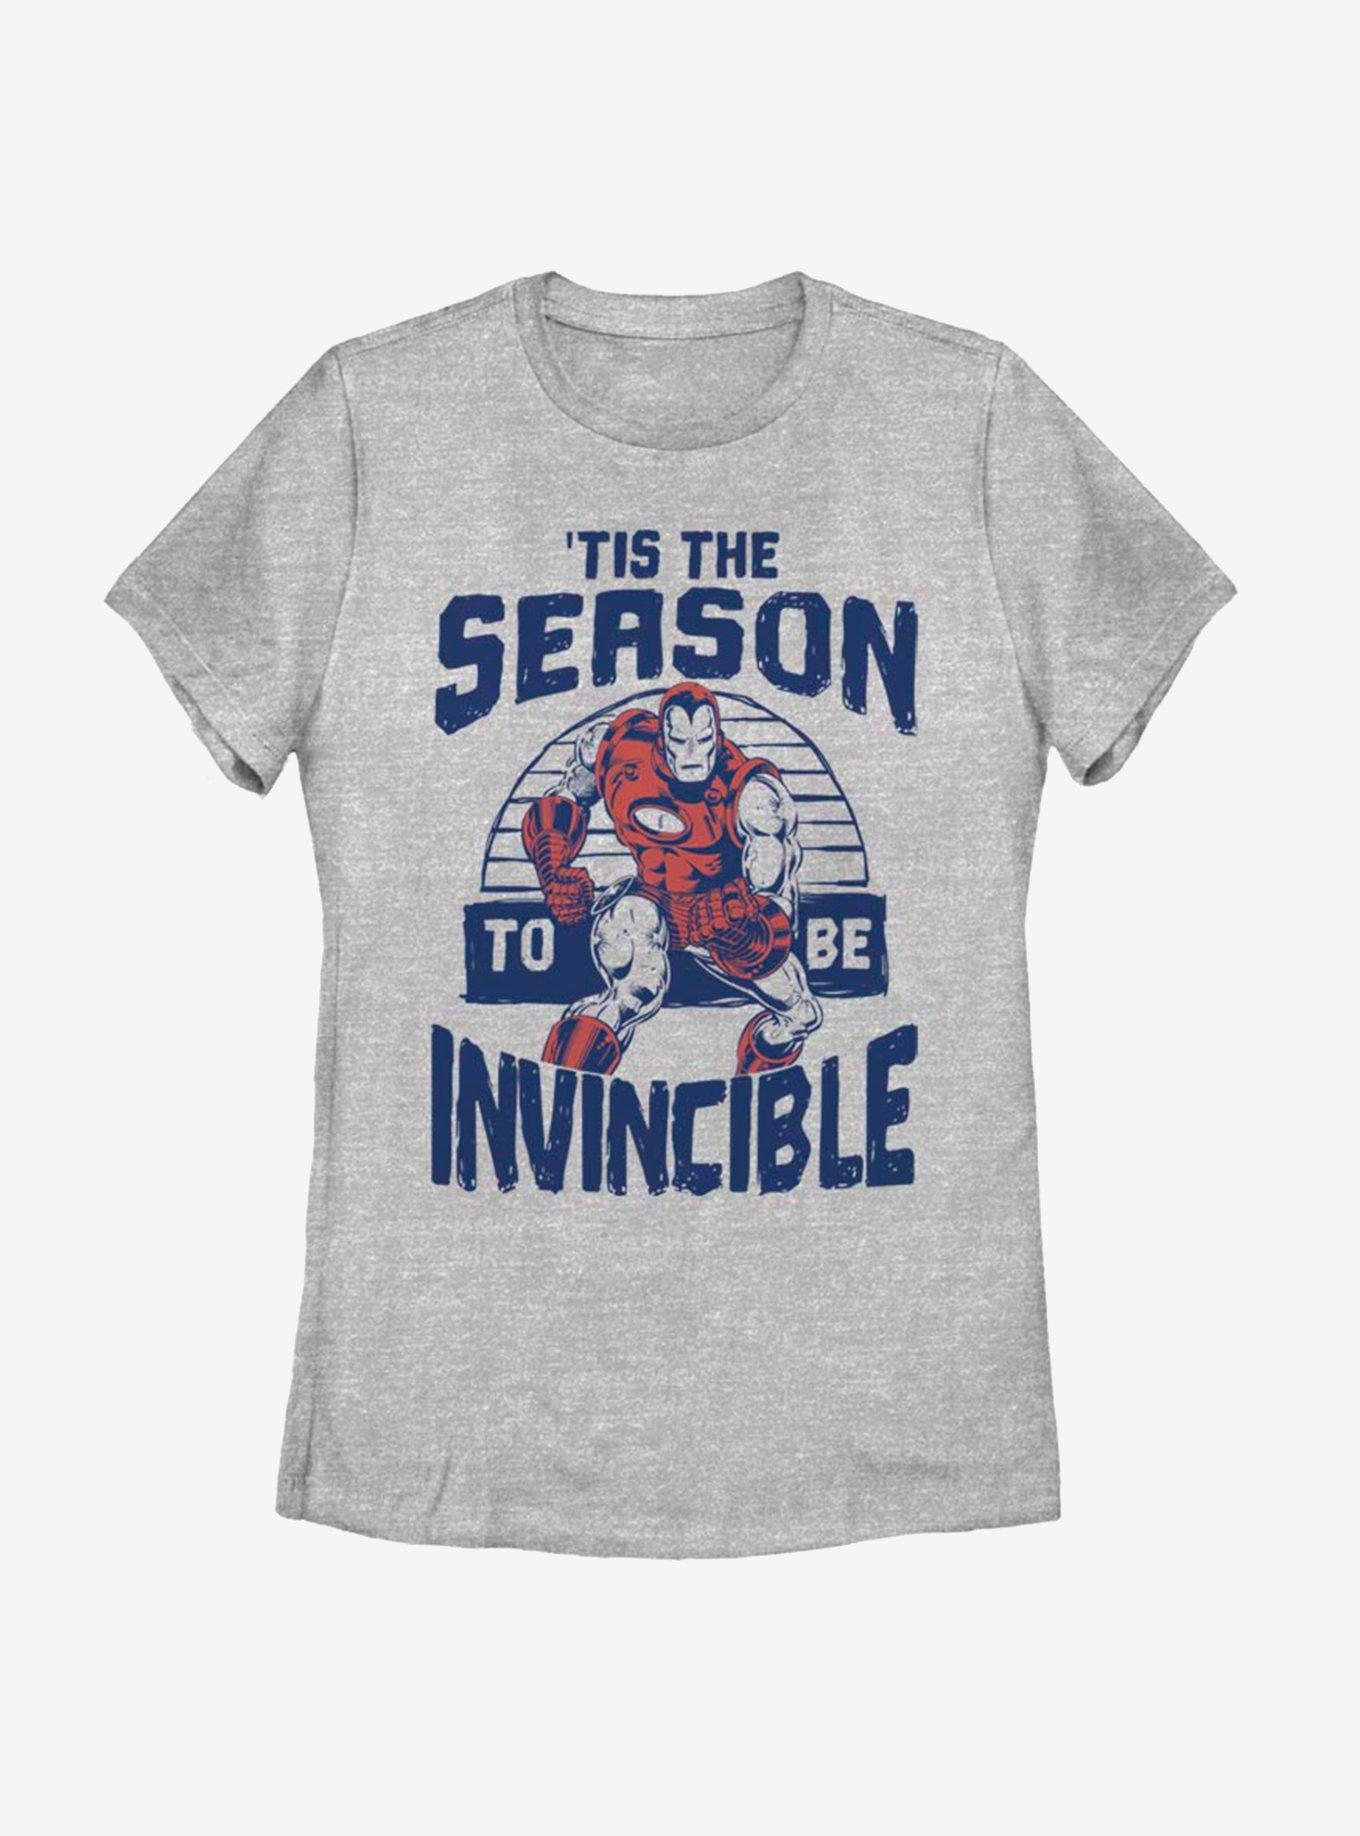 Marvel Iron Man Invincible Season Womens T-Shirt, ATH HTR, hi-res